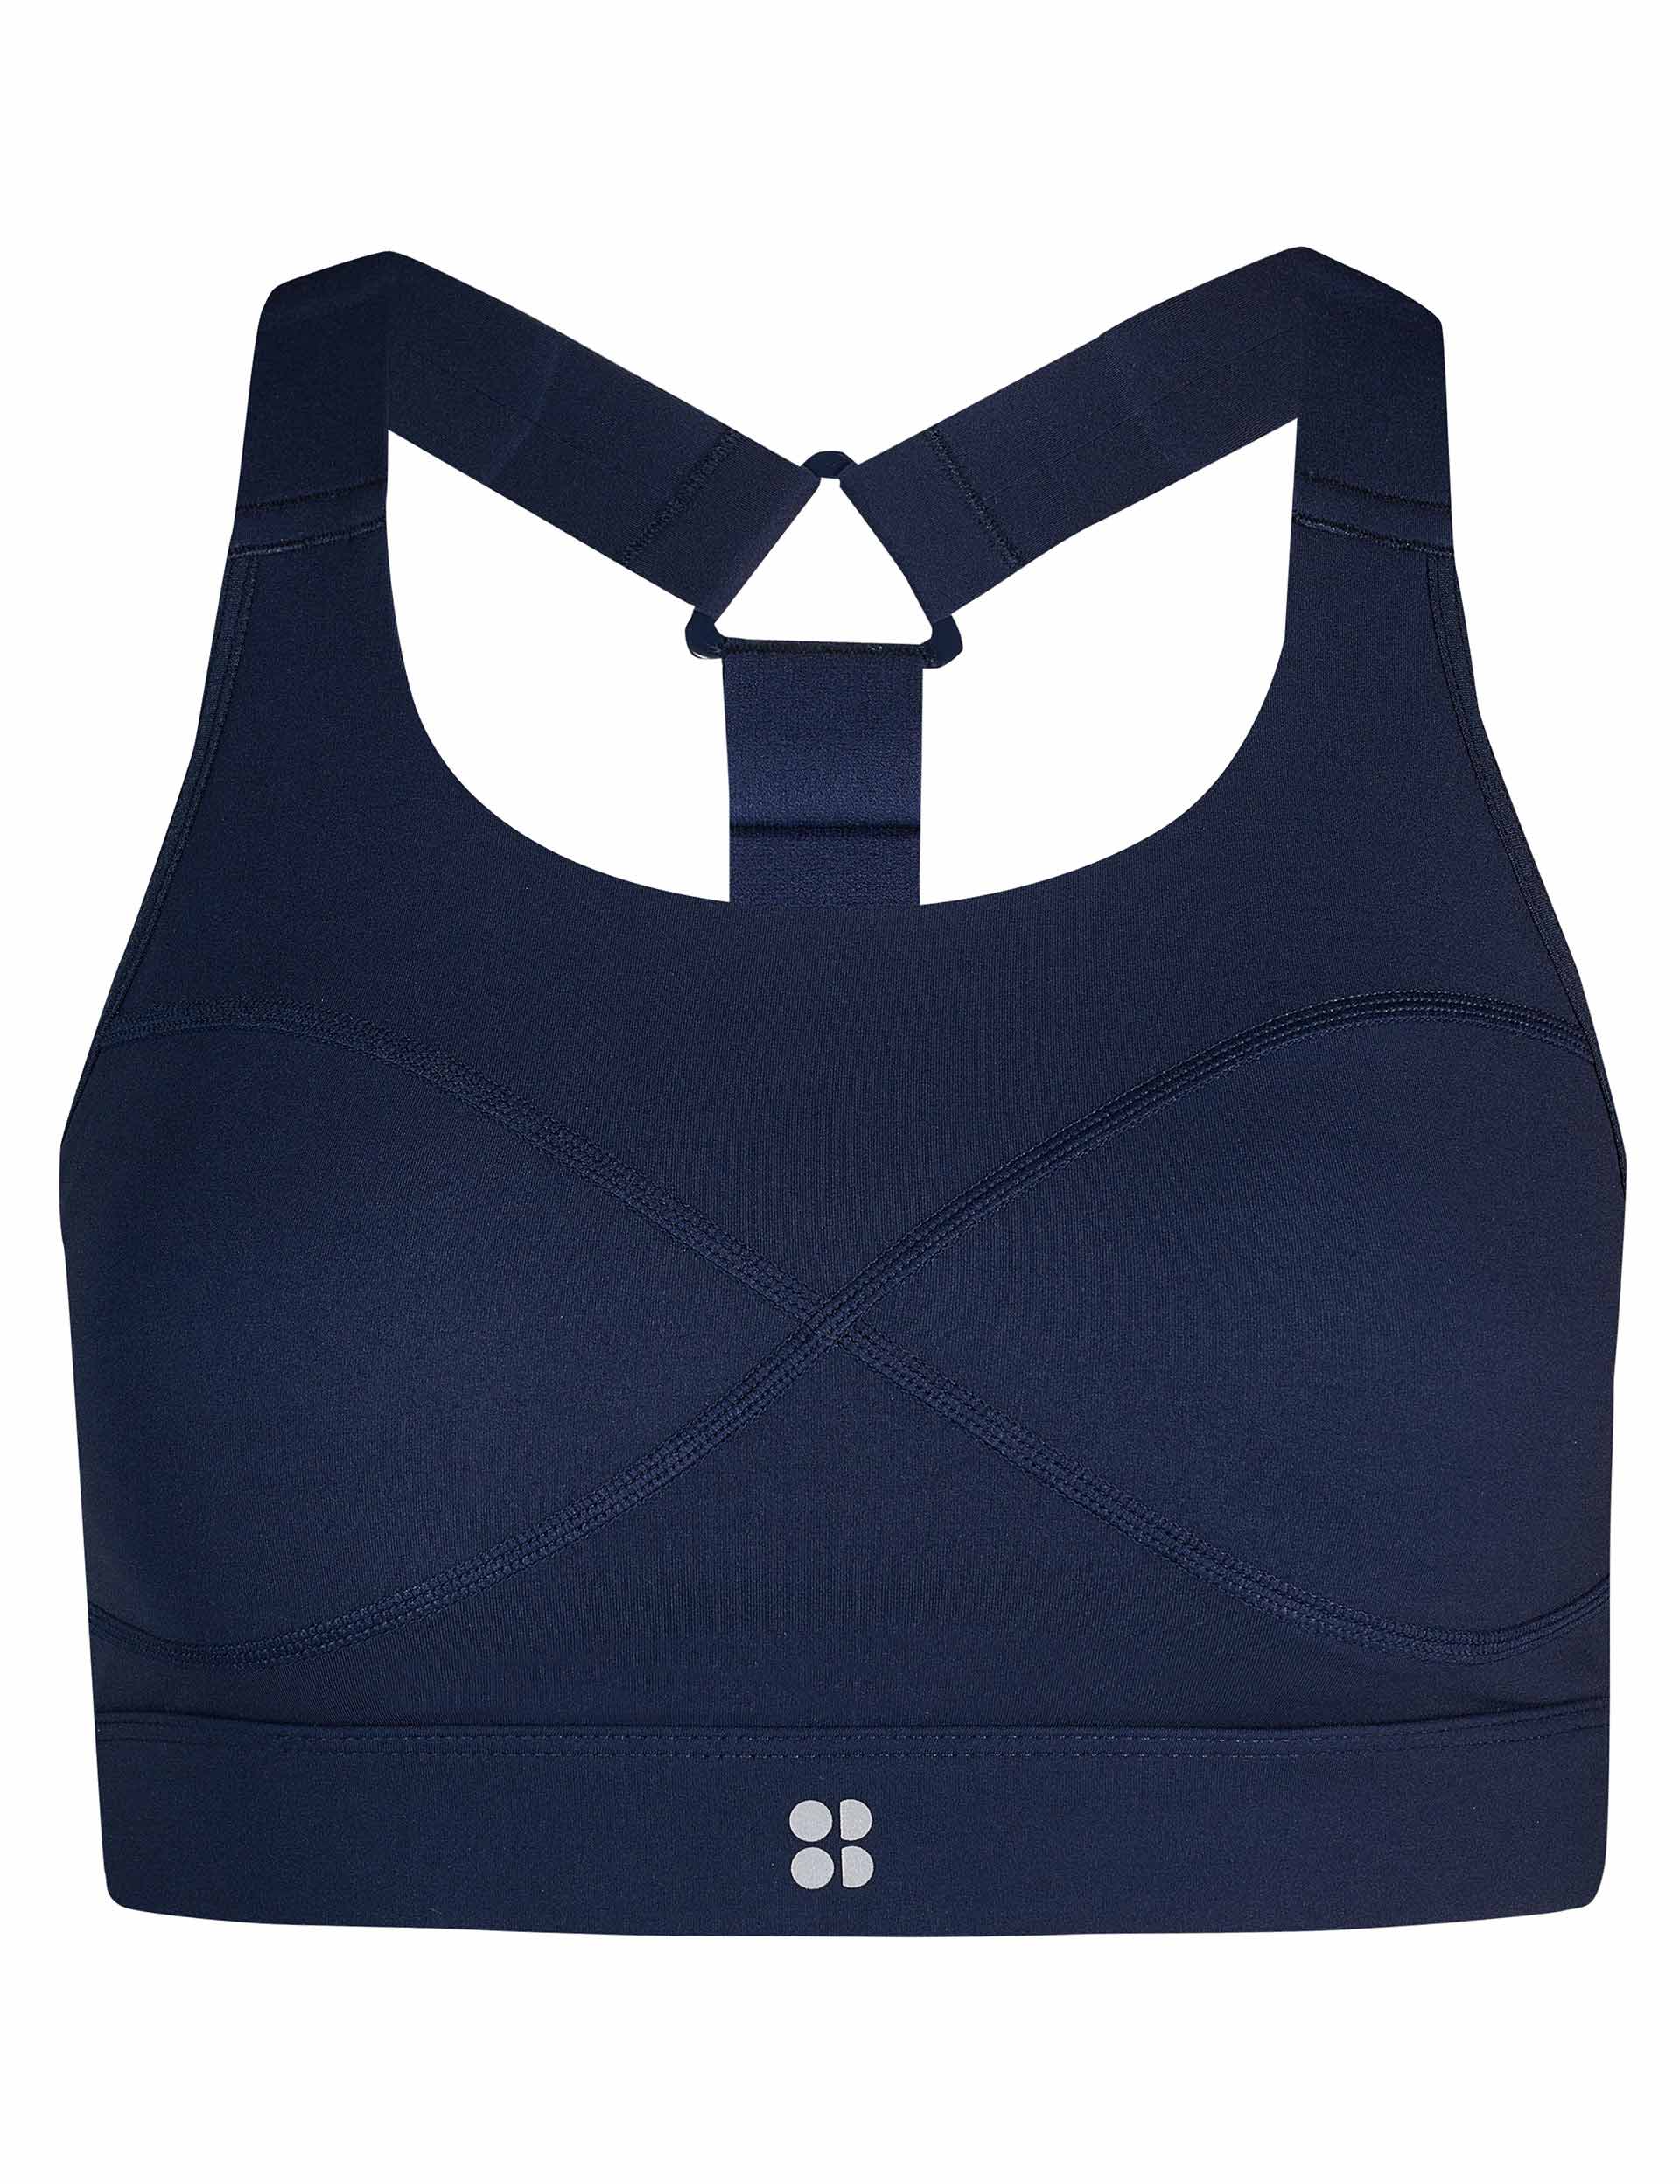 Sweaty Betty POWER CONTOUR ZIP BRA - Medium support sports bra